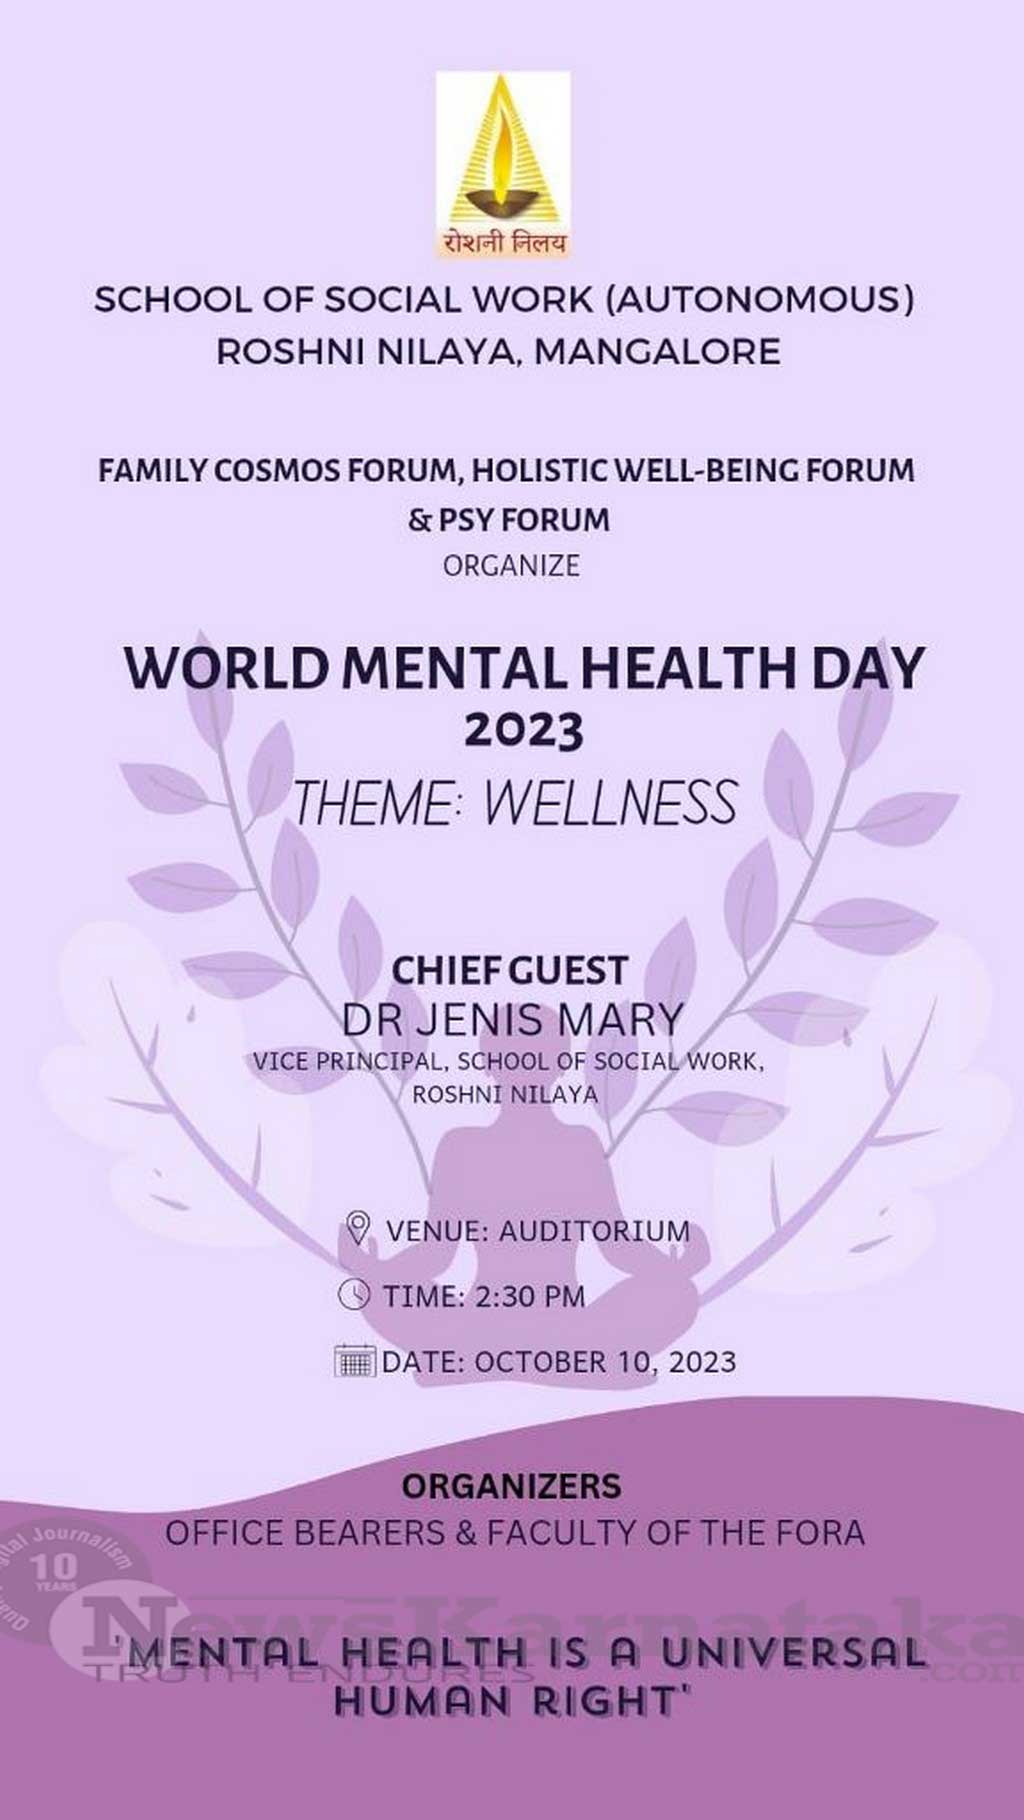 001 of 6 SSW Roshni Nilaya observes World Mental Health Day